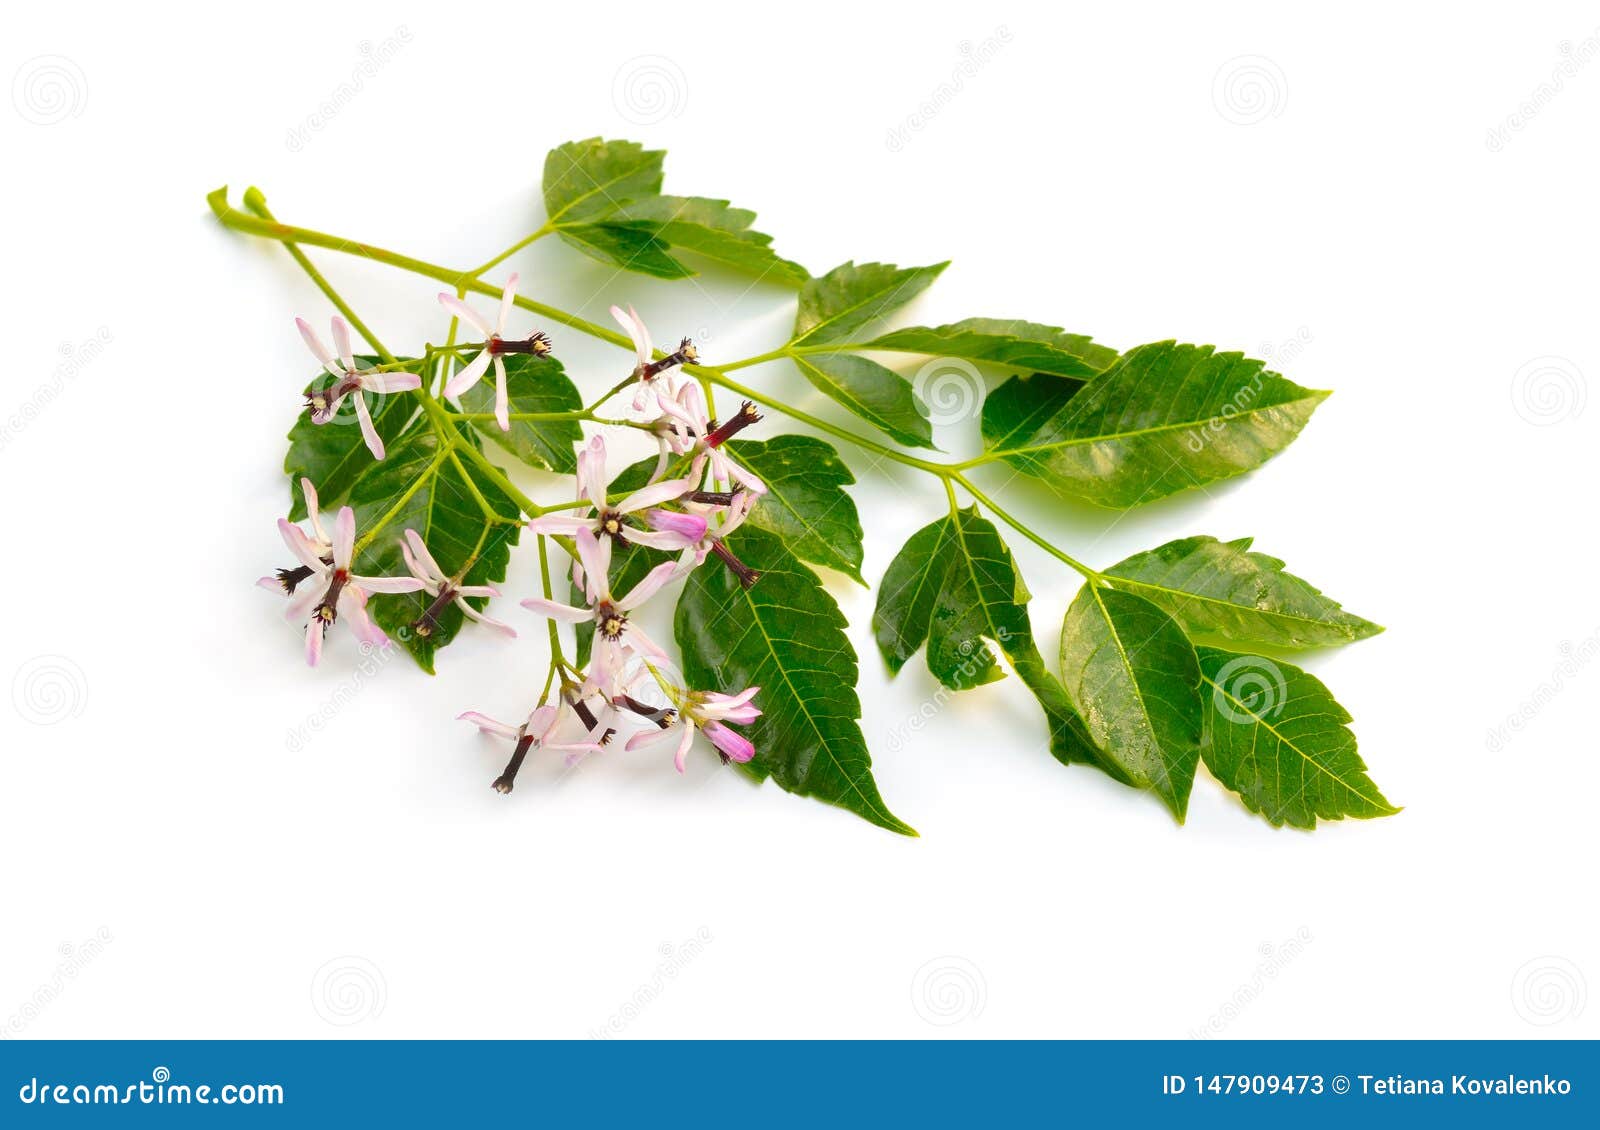 melia azedarach, chinaberry tree, pride of india, bead-tree, cape lilac, syringa berrytree, persian lilac